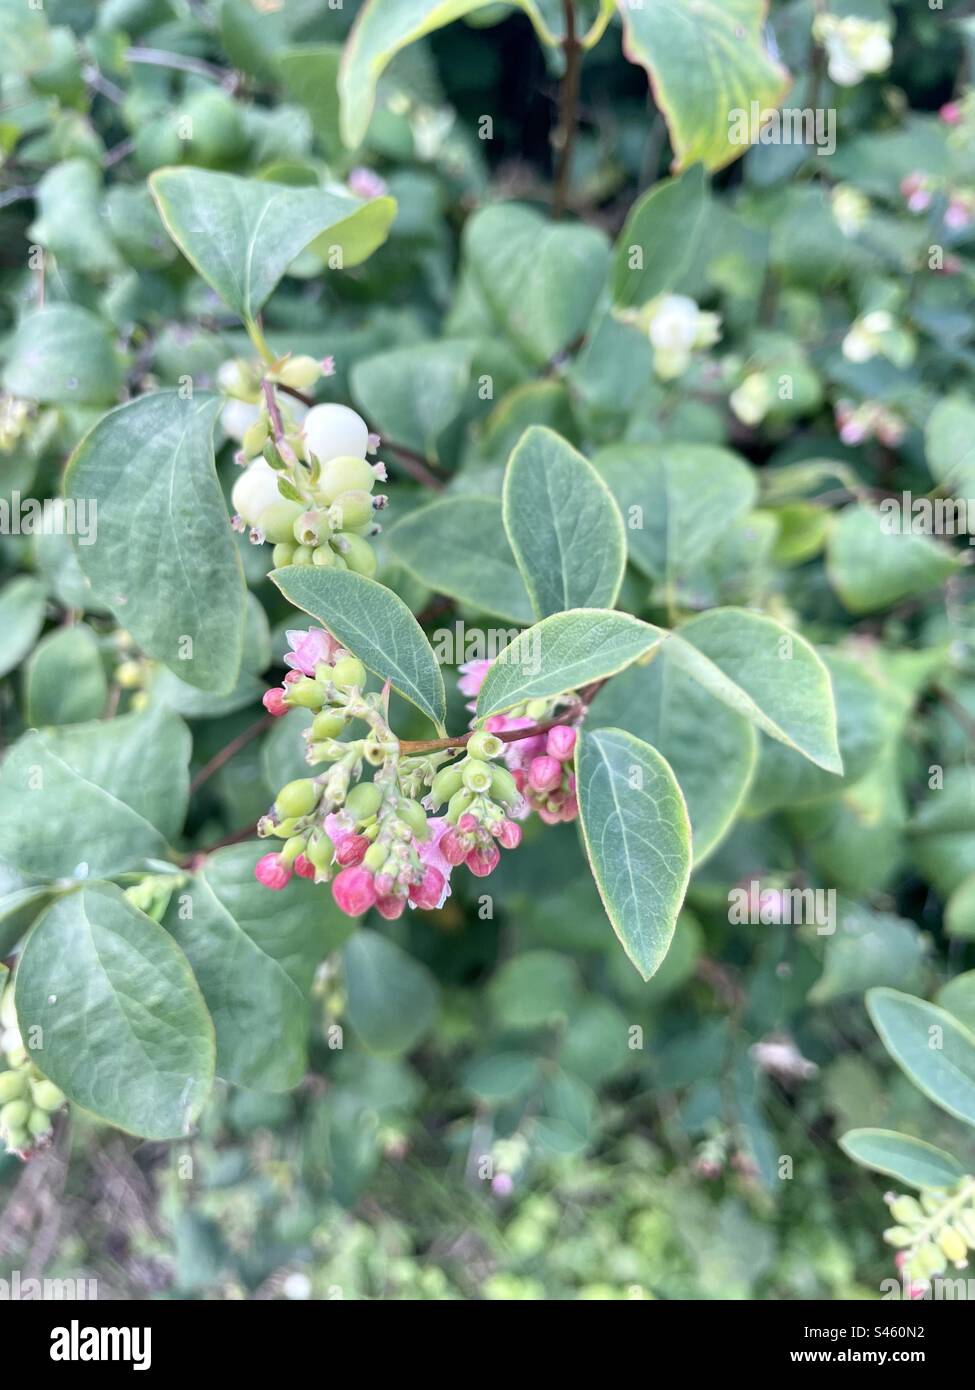 Common Snowberry Bush - Symphoricarpos albus. This bush is a species of flowering plant in the honeysuckle family. Stock Photo